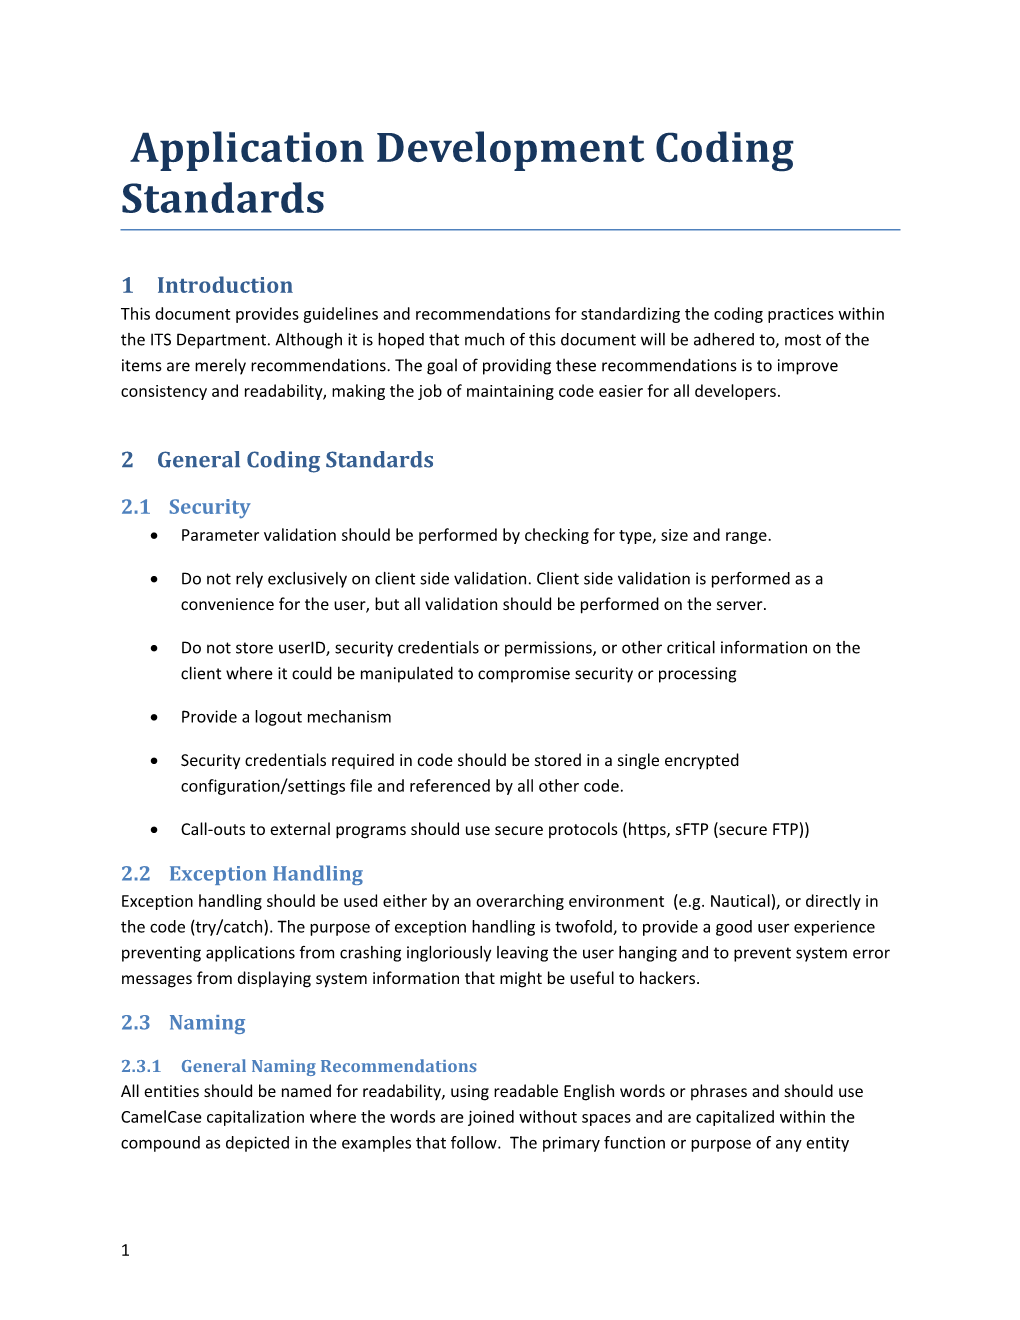 Application Development Coding Standards